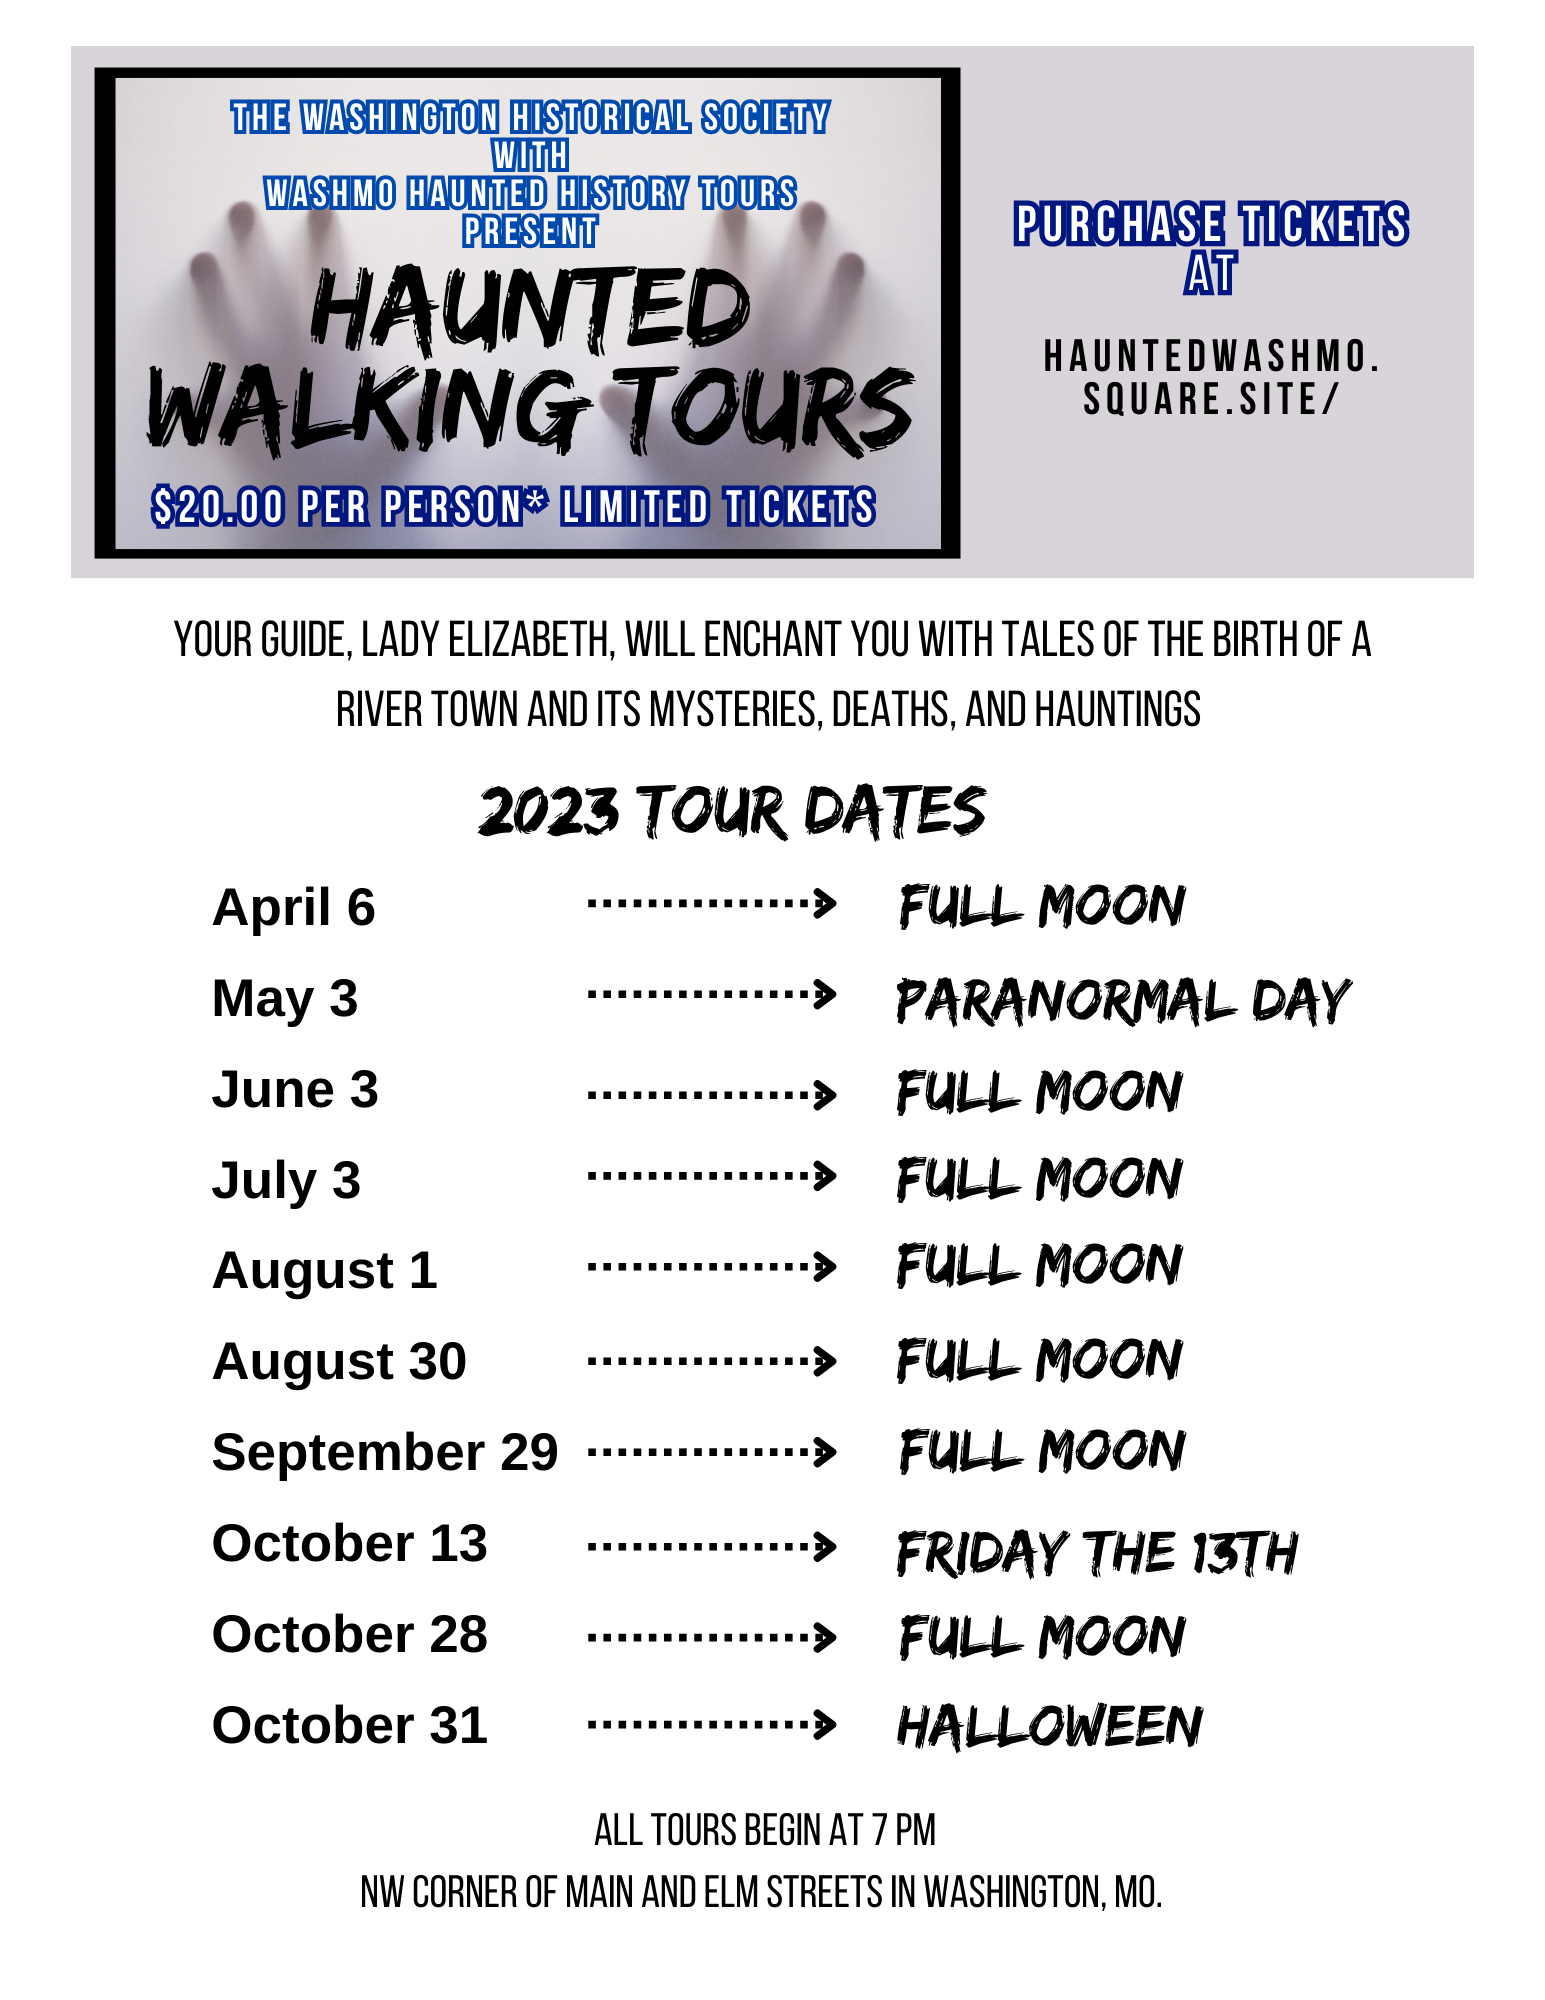 Event Flyer with tour description, dates and times